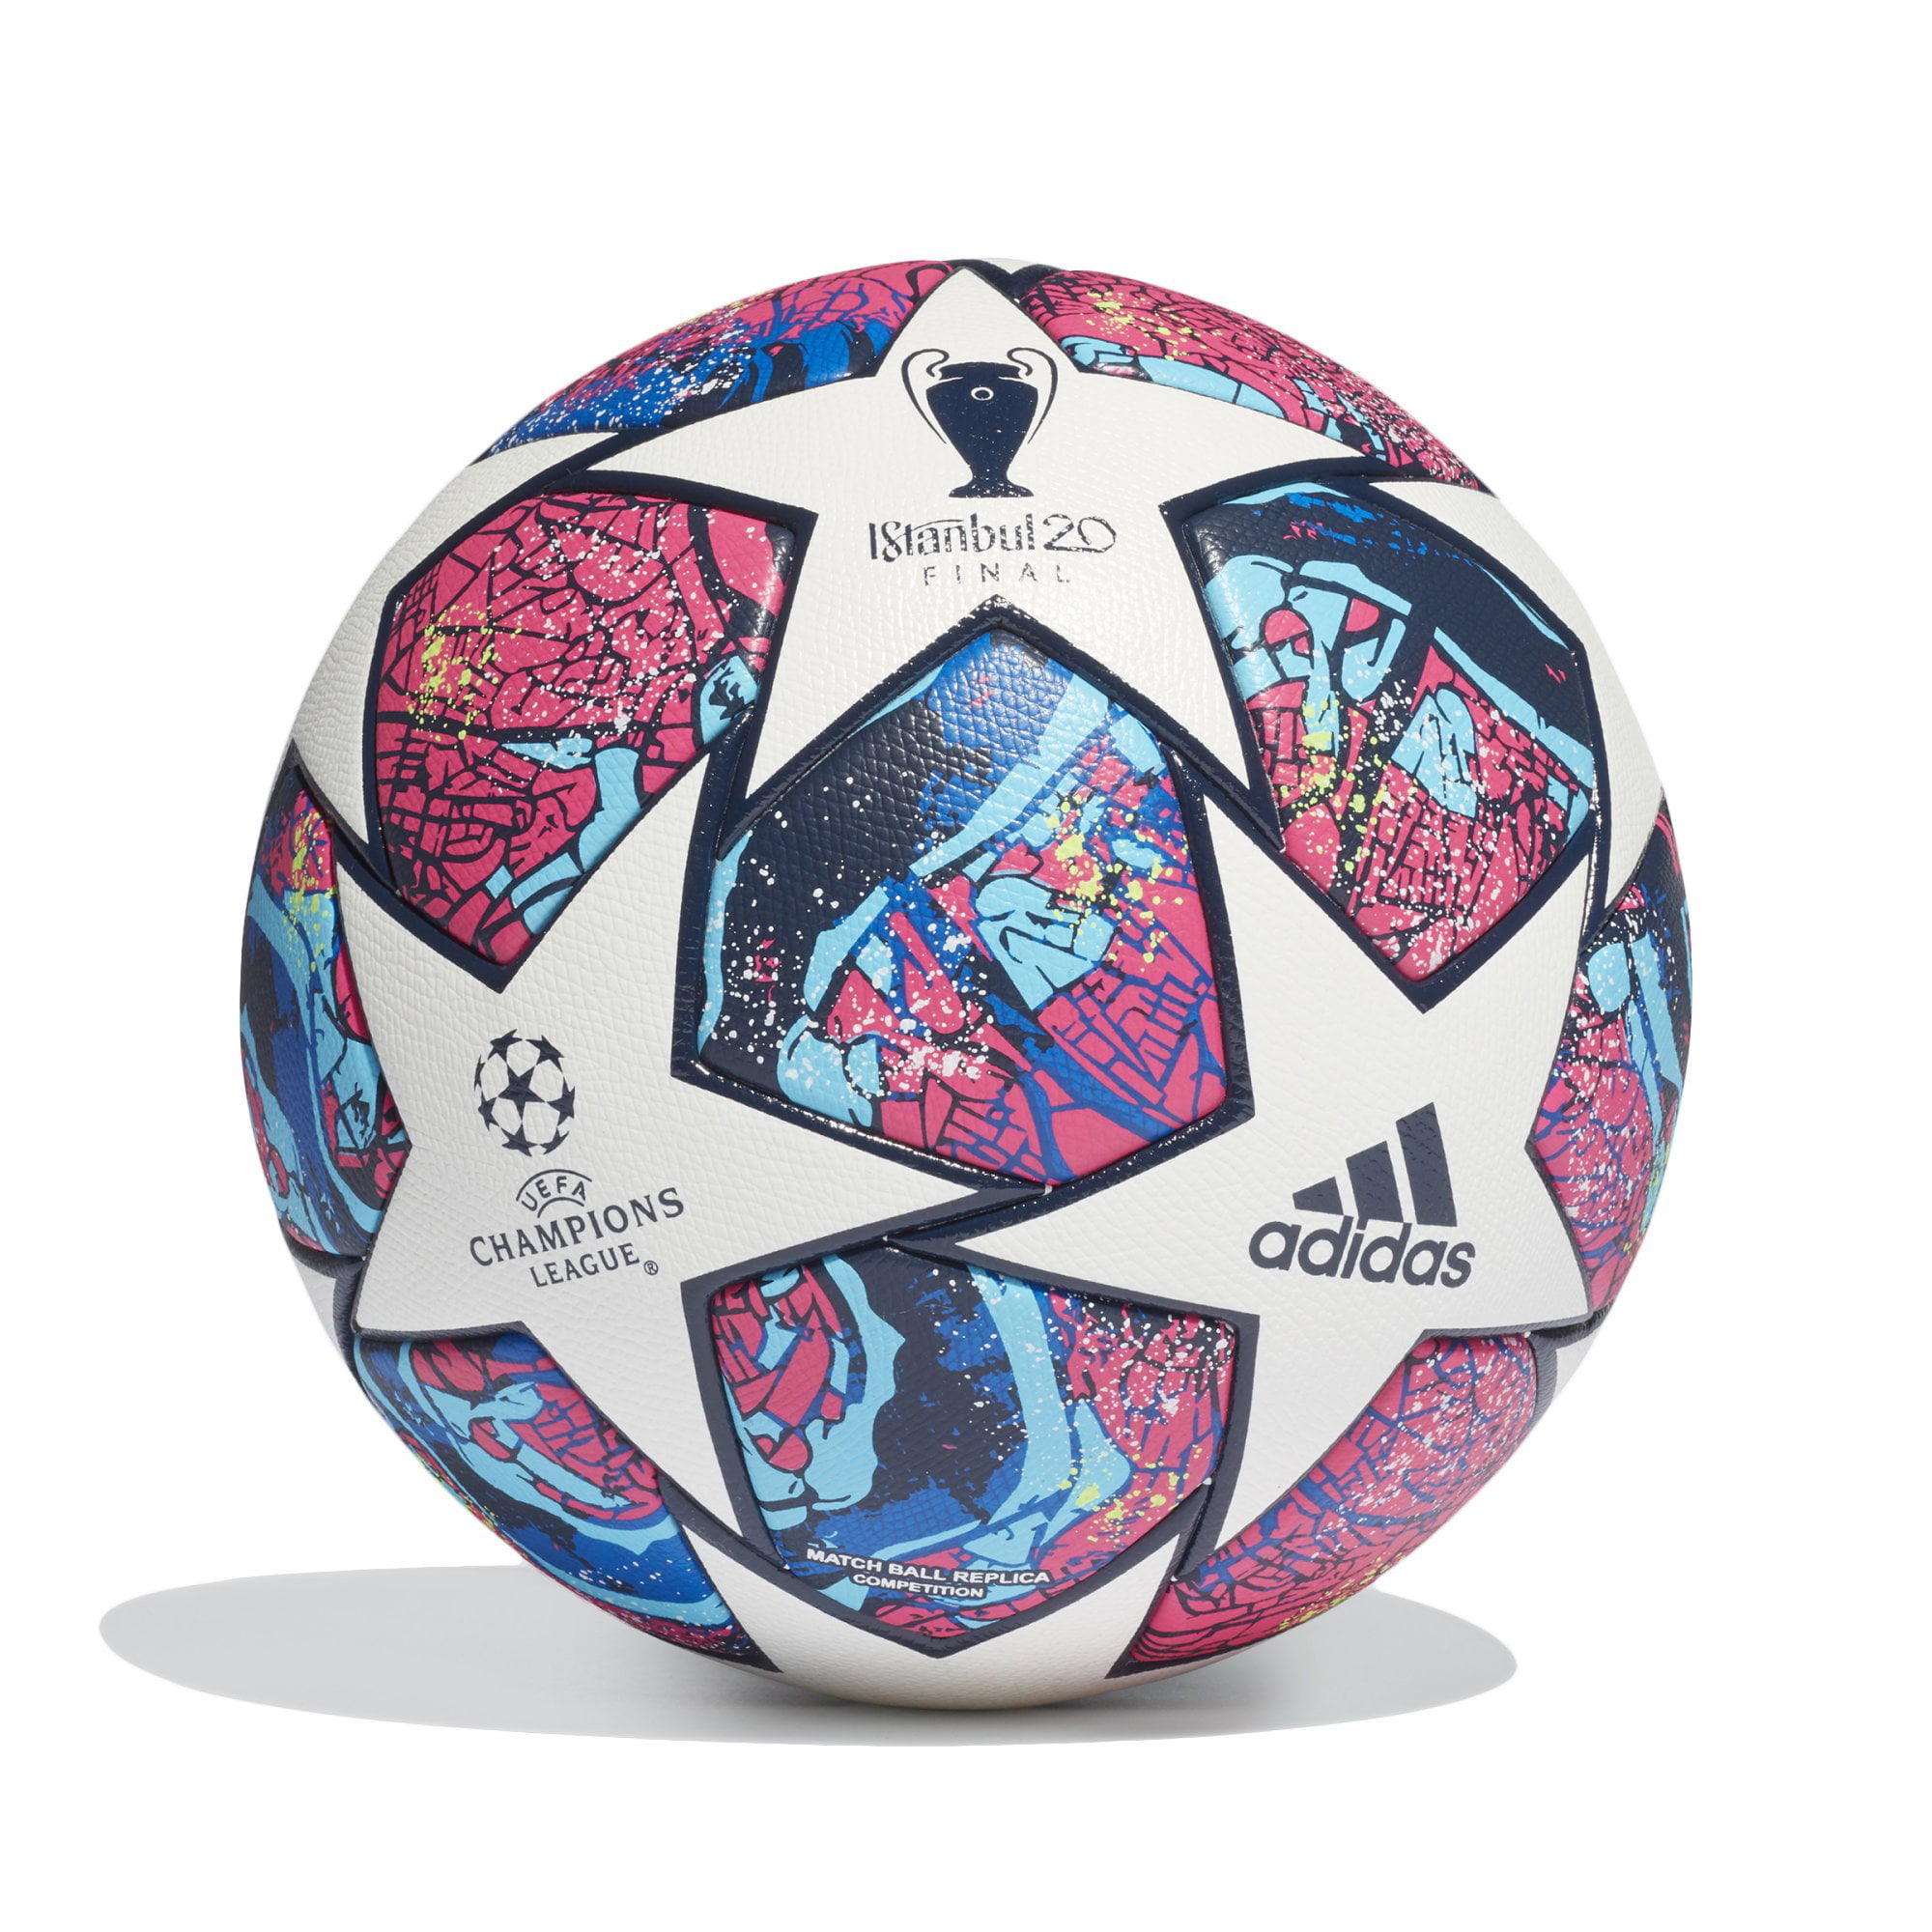 Adidas Champions League Finale Soccer Ball, FIFA 2003